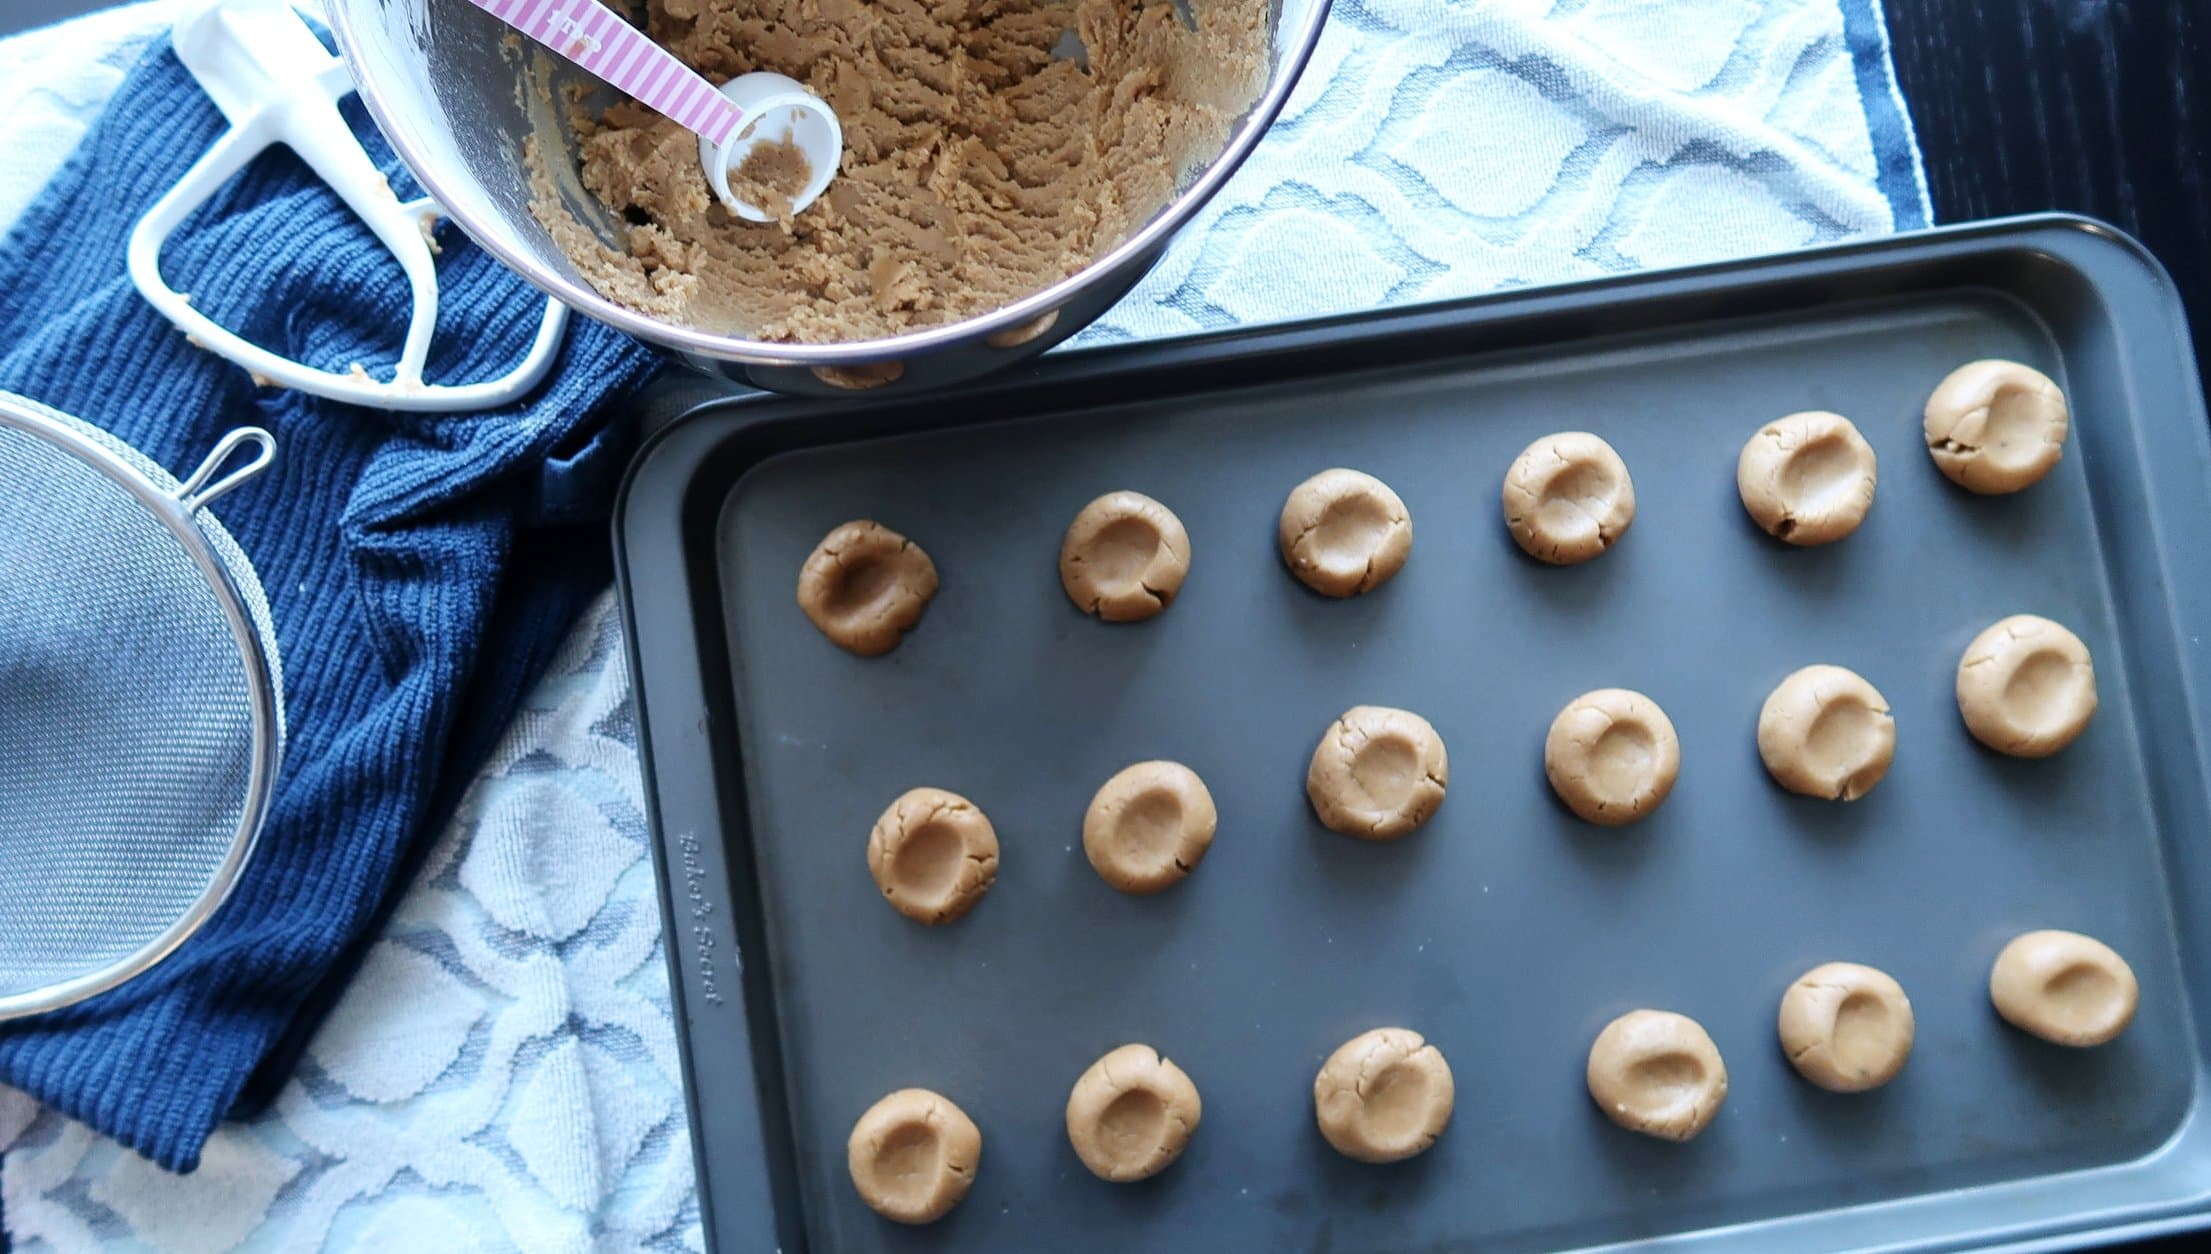 Thumbprint cookie dough on a baking sheet.